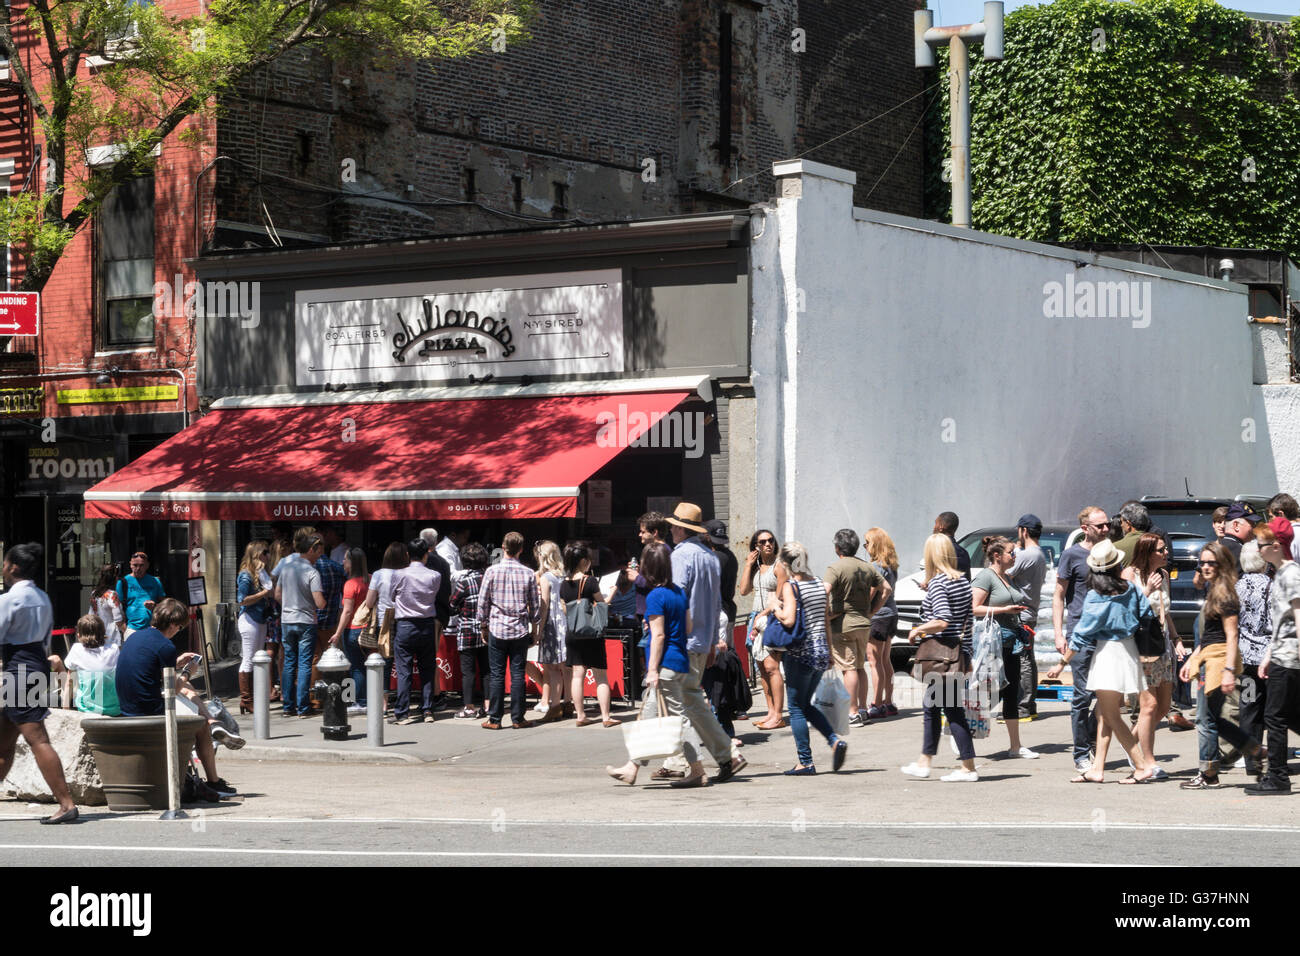 Busy Sidewalk in Front of Juliana's Pizza, Brooklyn, NYC Stock Photo - Alamy